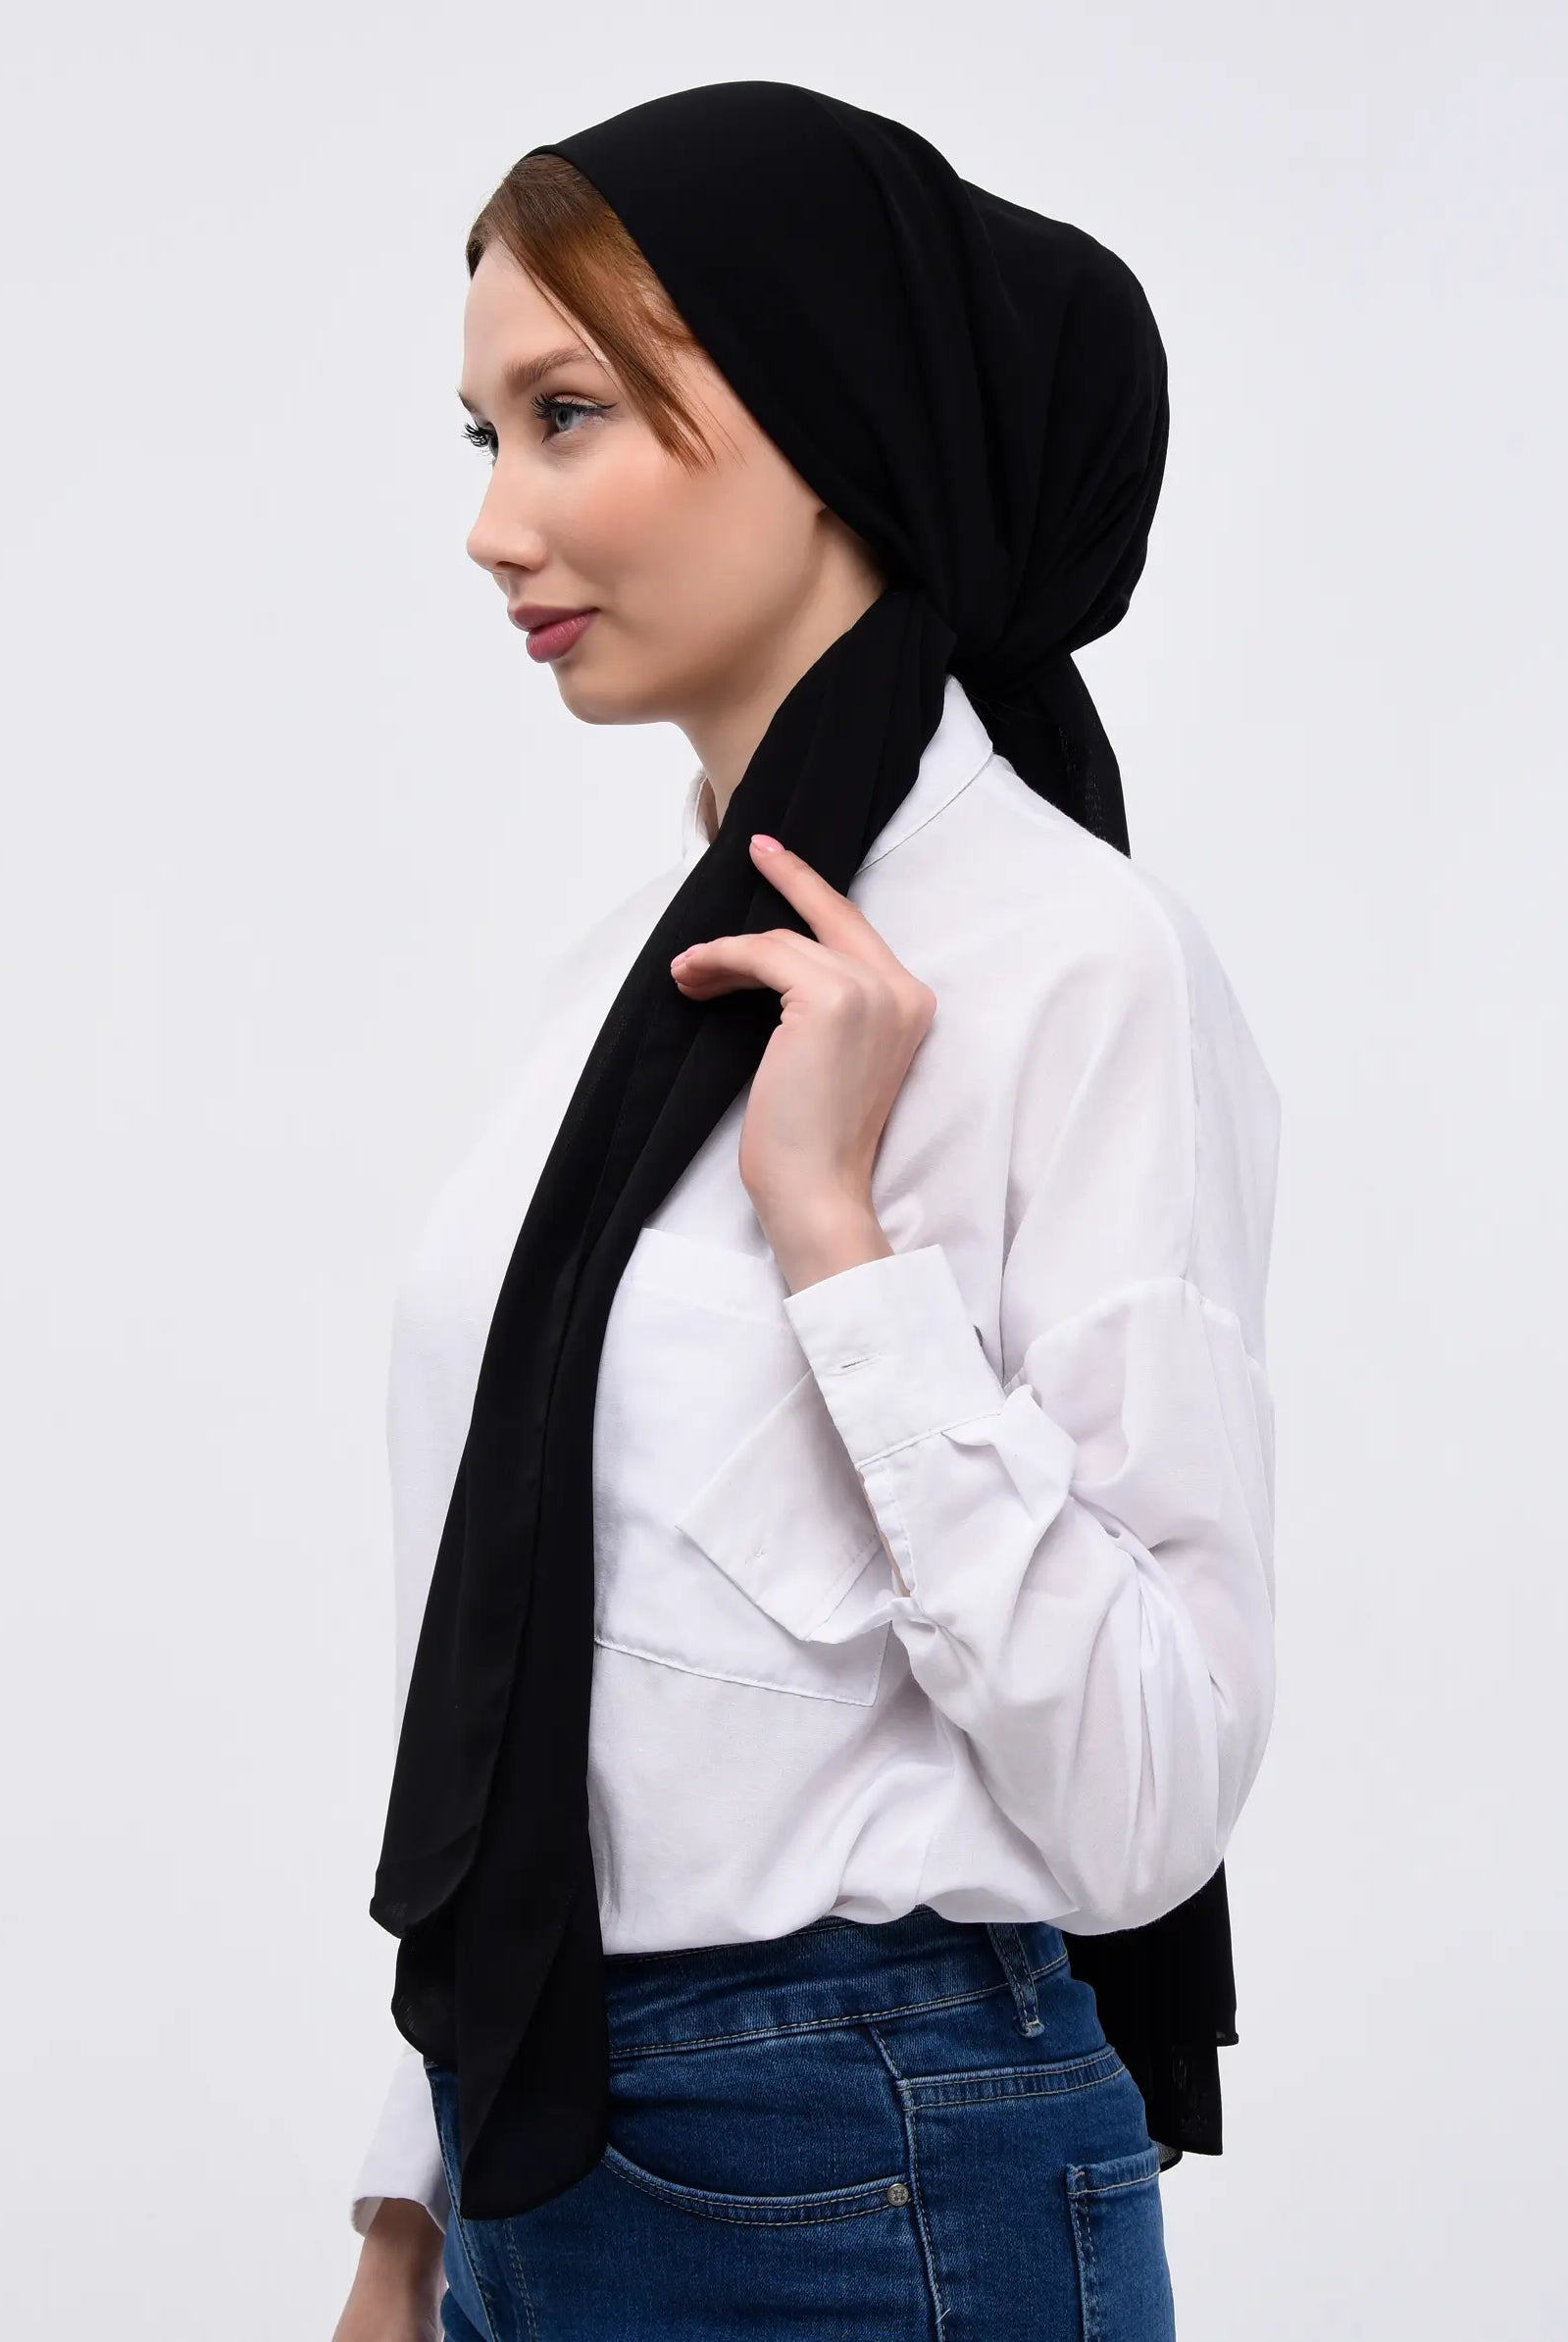 Black chiffon hijab